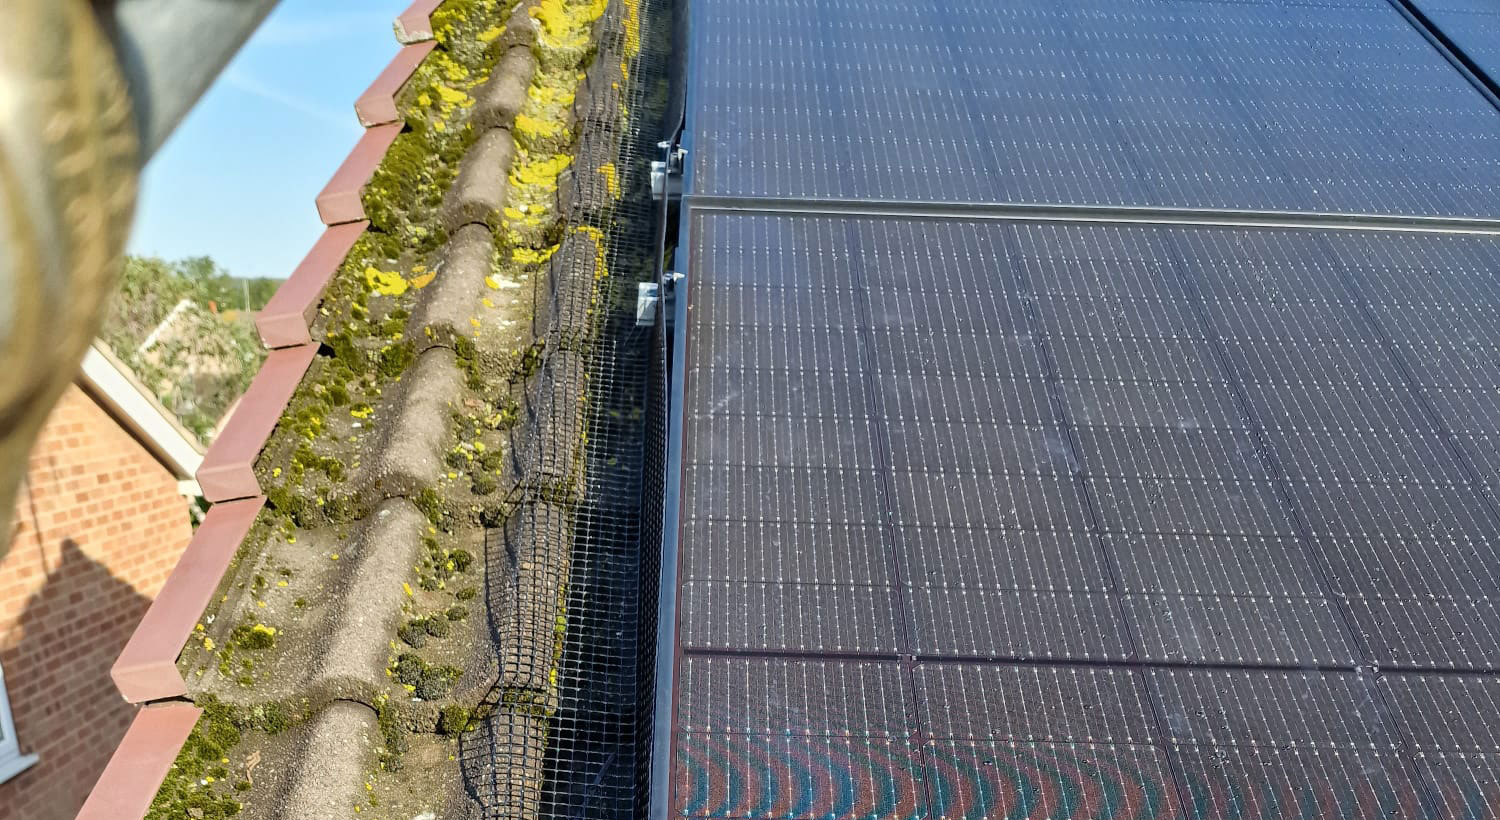 Long+Eaton+Pigeon+Proofing+Solar+Panels